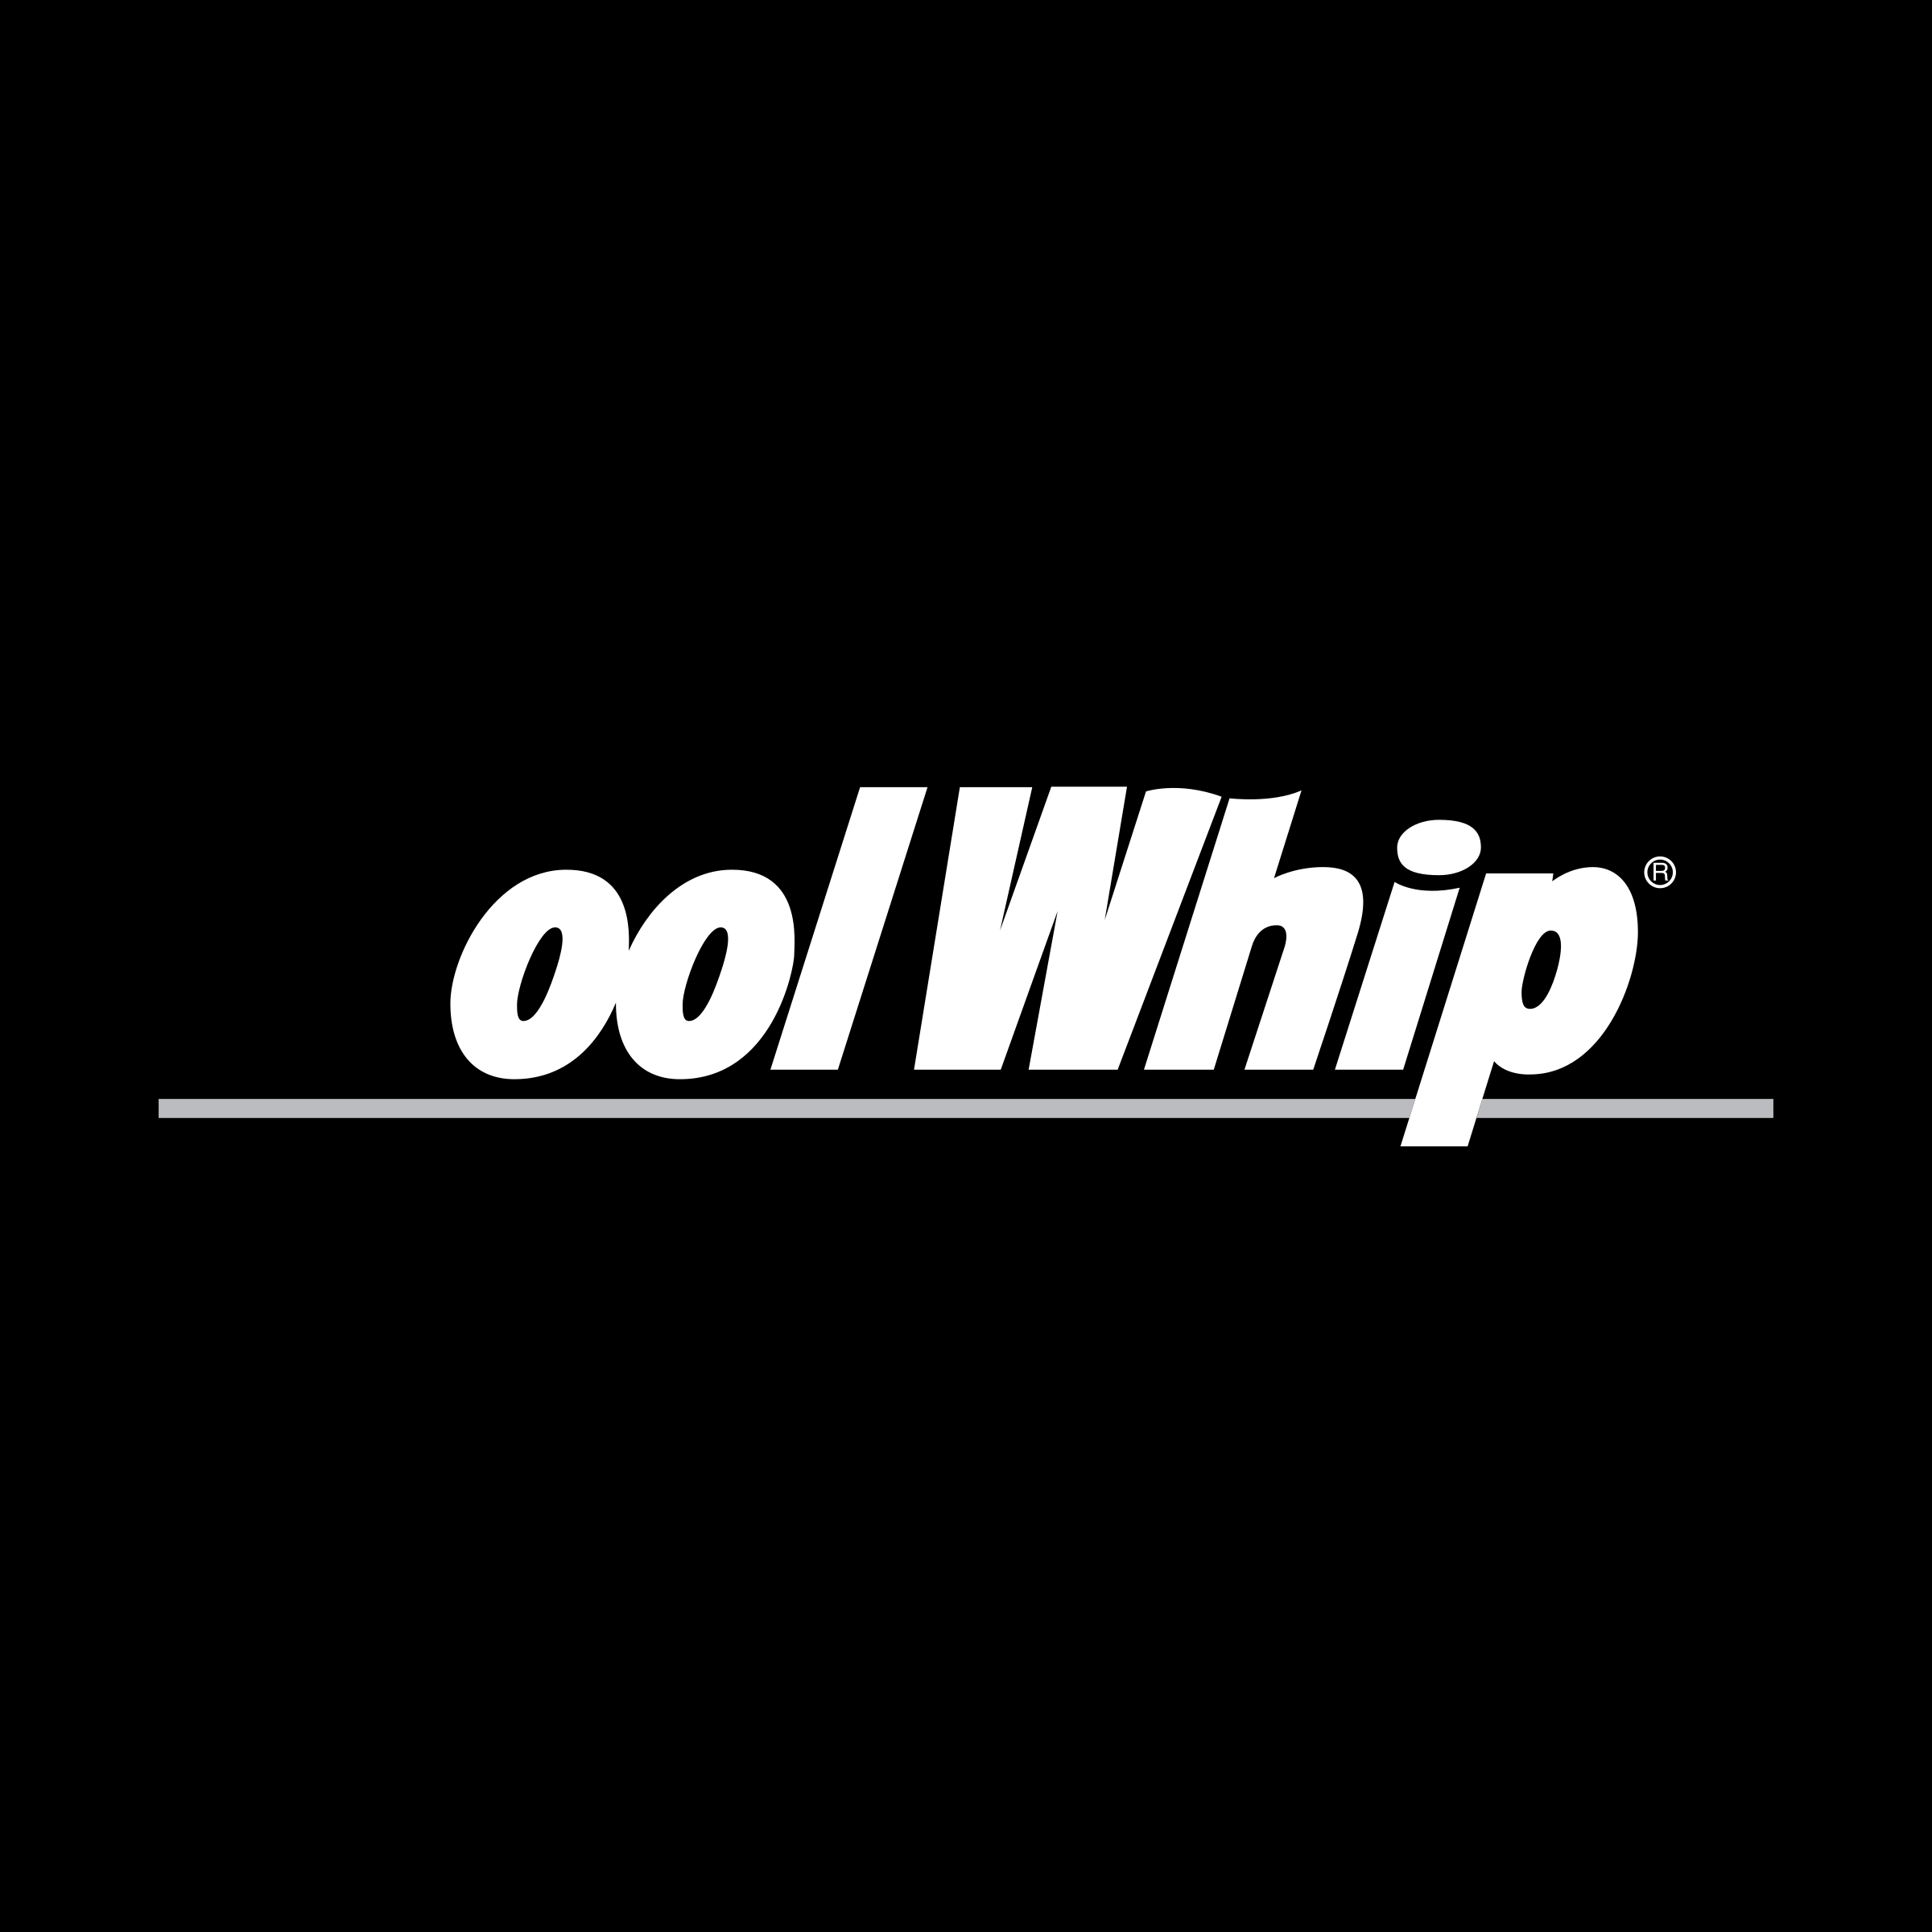 Cool Transparent Logo - Cool Whip Logo PNG Transparent & SVG Vector